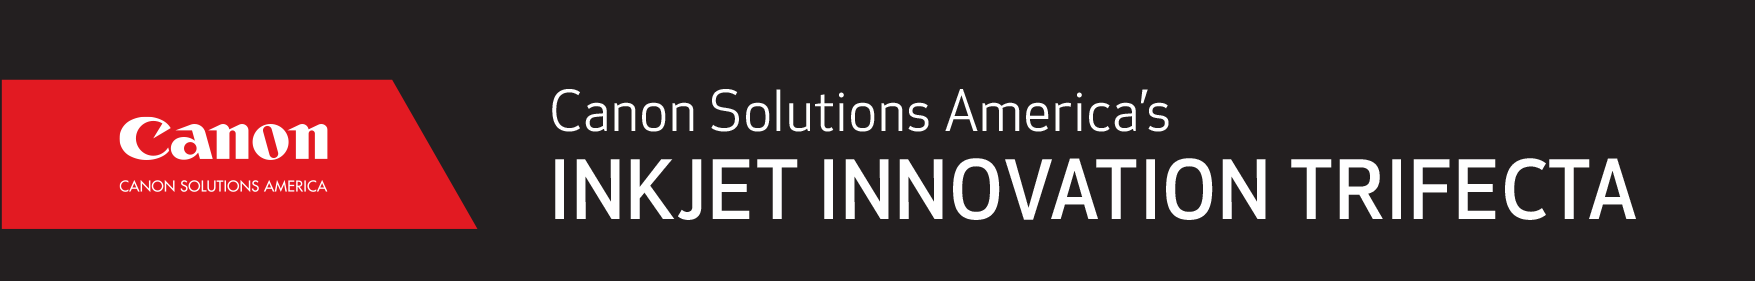 Canon Solutions America’s Inkjet Innovation Trifecta – 1200 DPI Presses in Our Inkjet Portfolio.